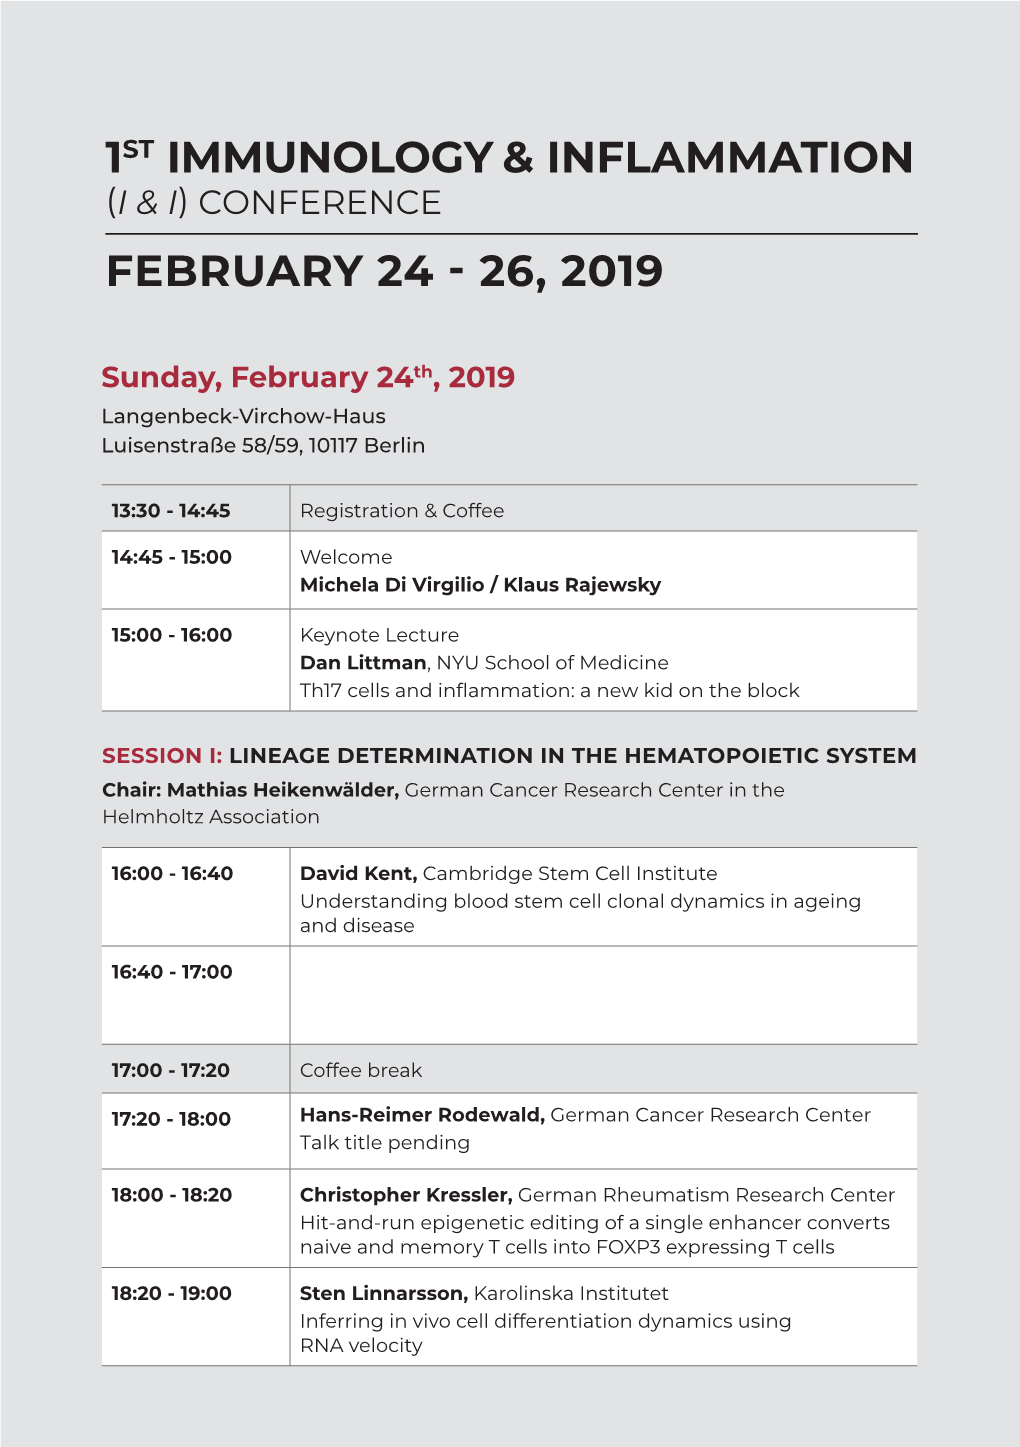 February 24 - 26, 2019 | Berlin, Germany